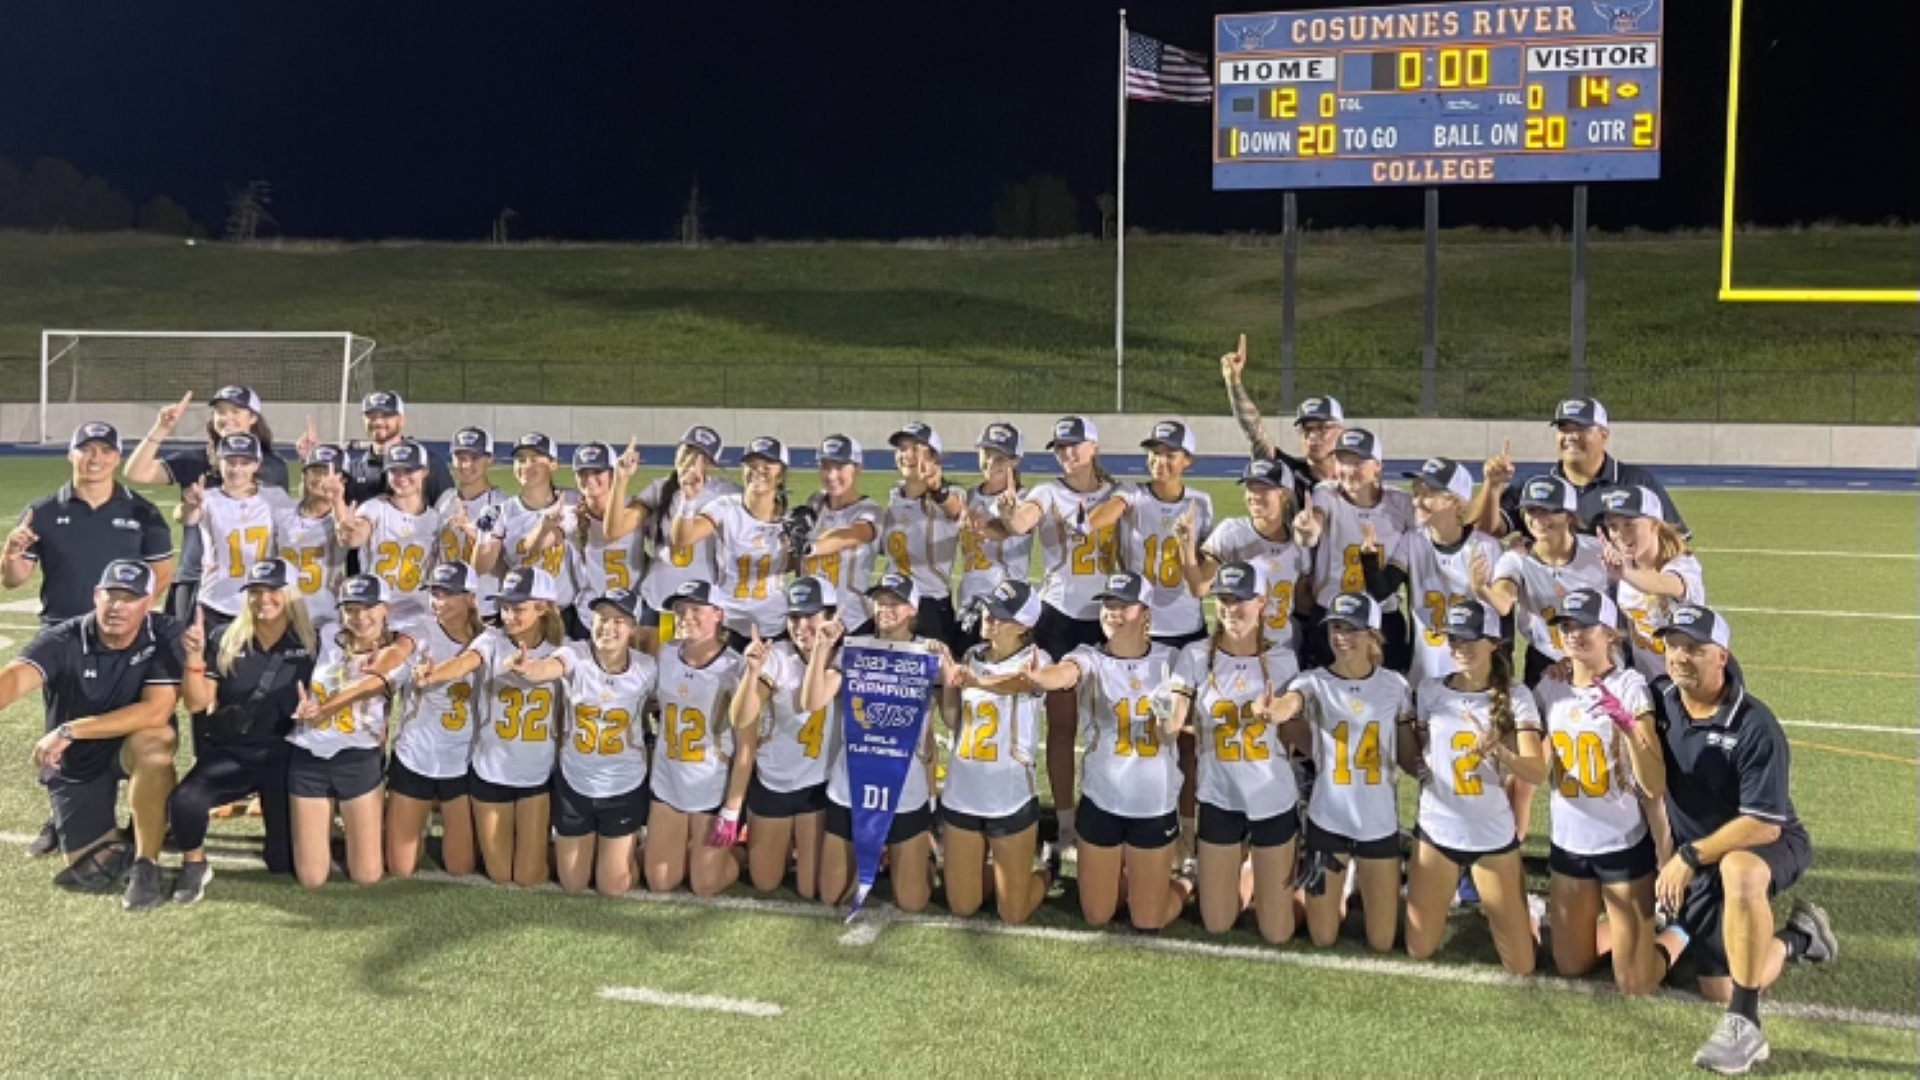 Del OroSlide 8 - DO Wins First Ever Girls Flag Football Championship!